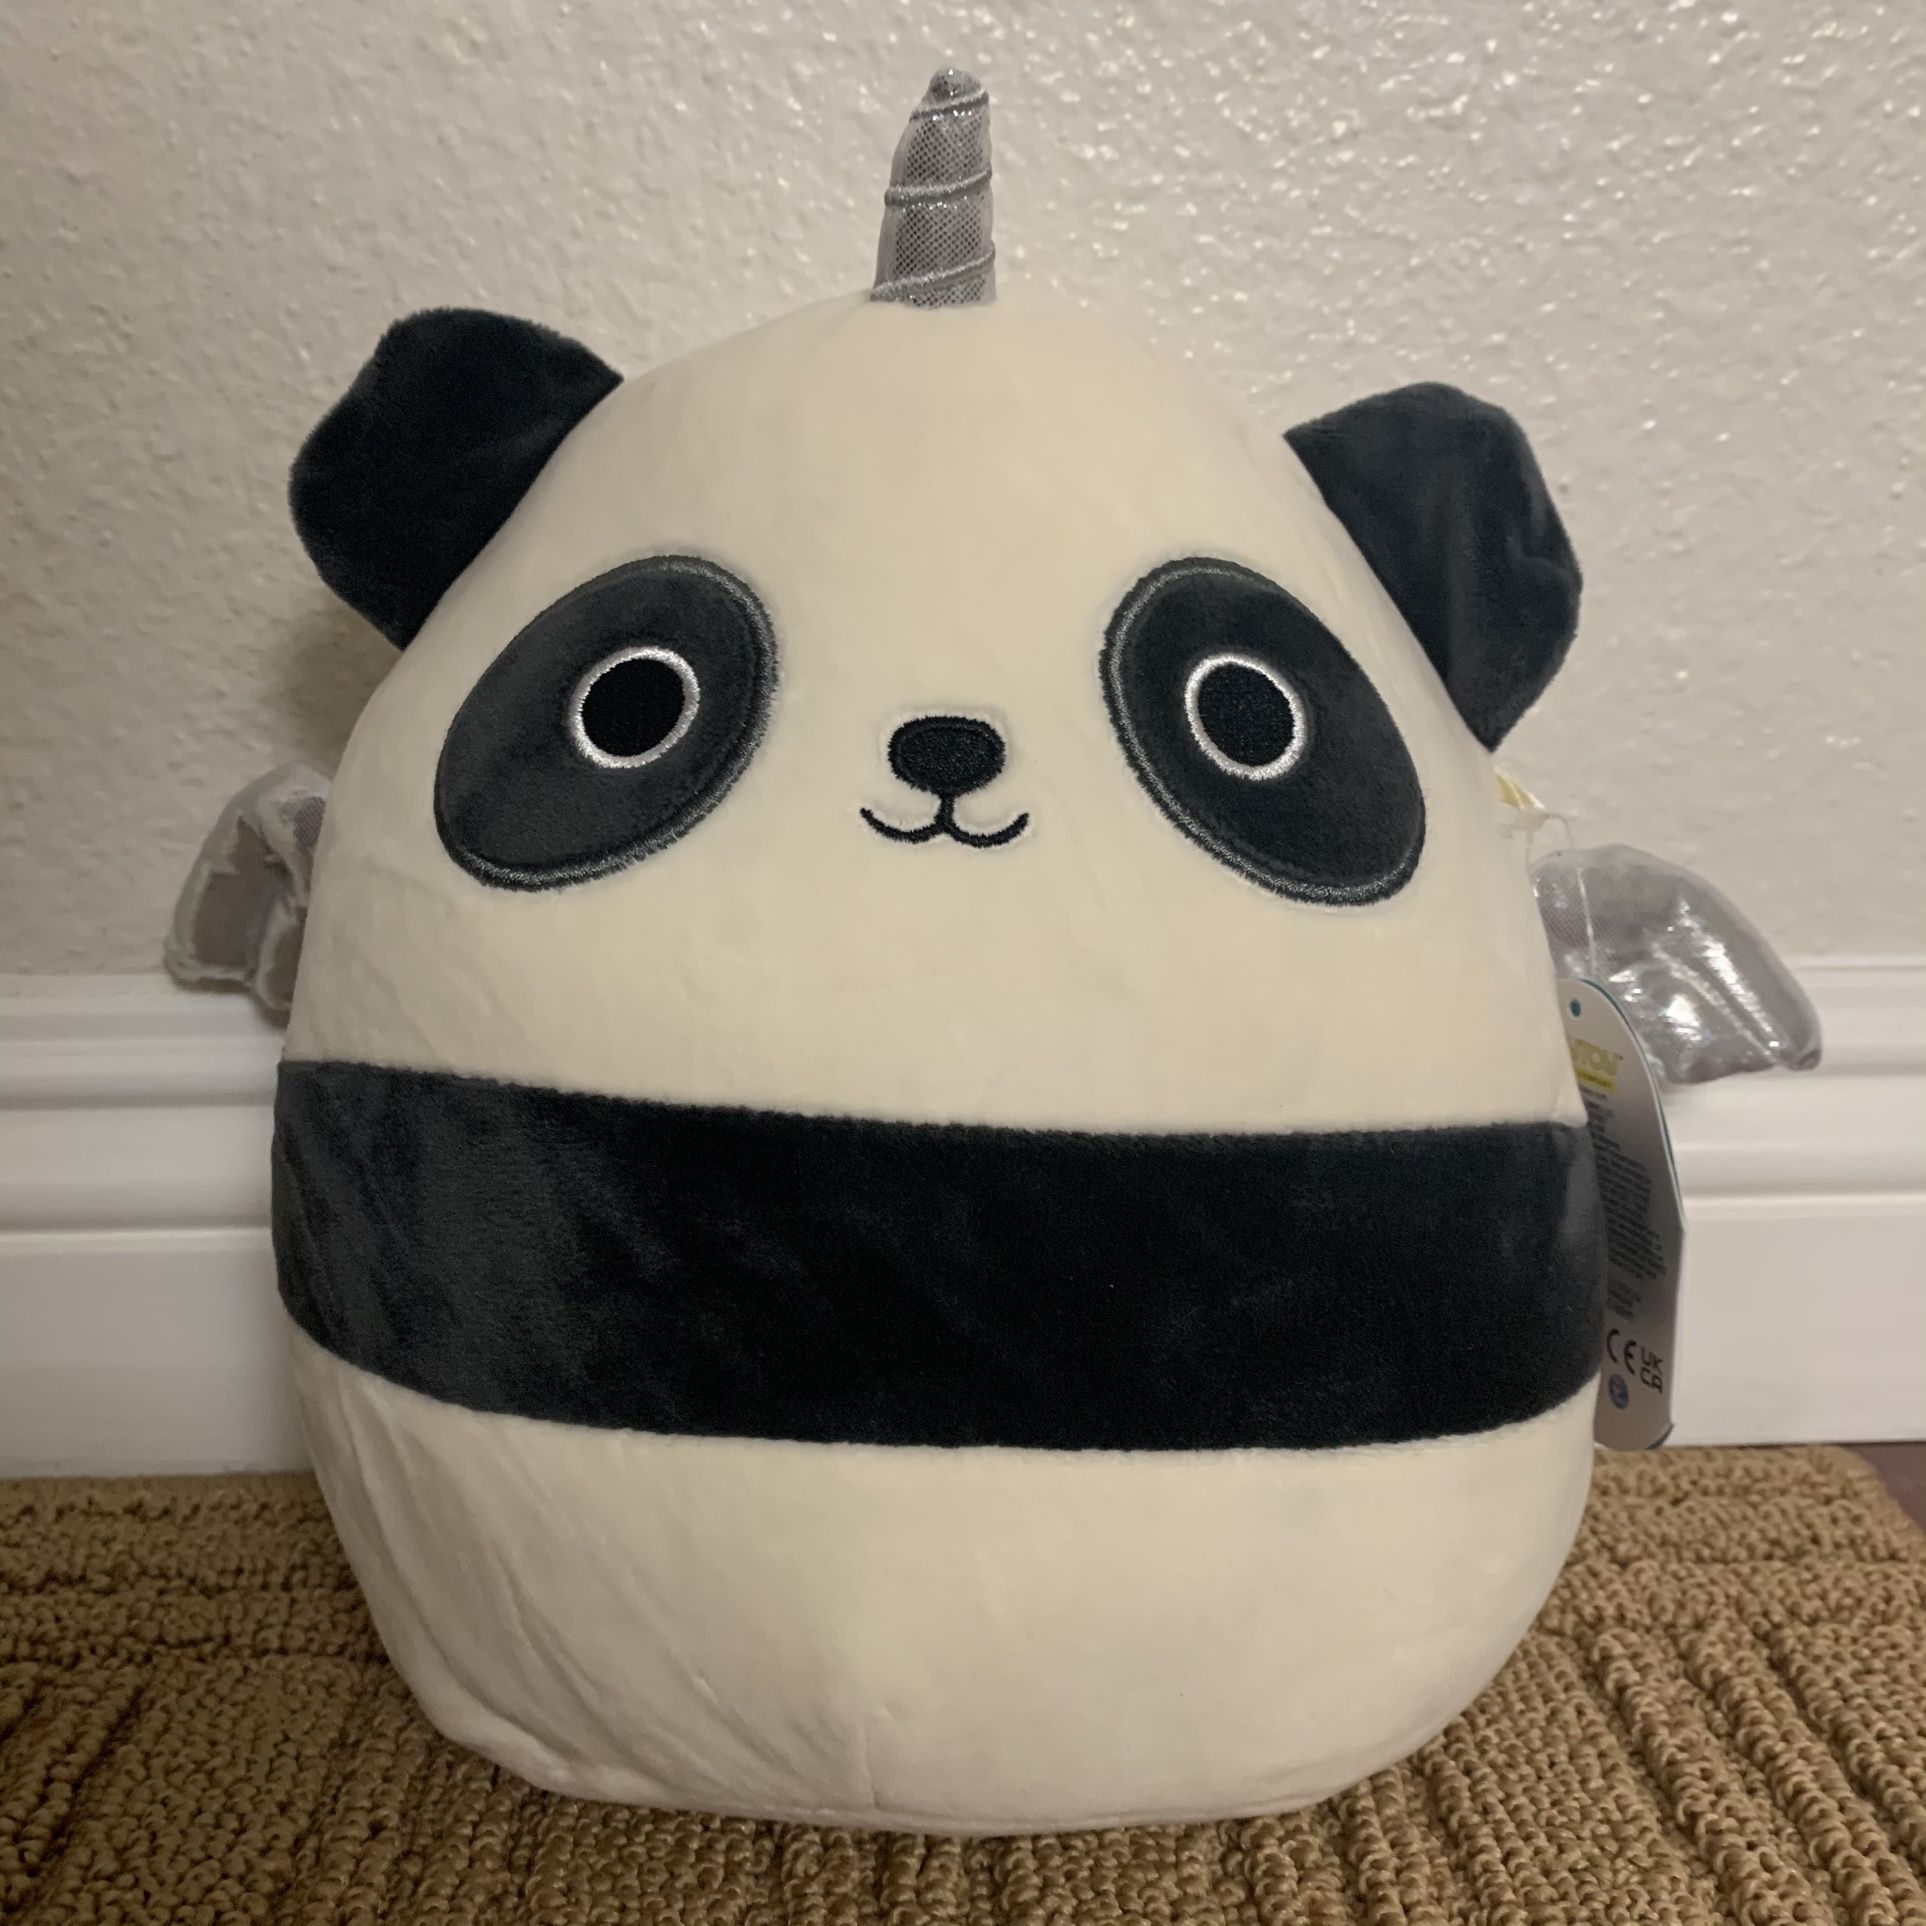 Squishmallow 8” Kayce The Panda Unicorn 2021 Edition NWT!